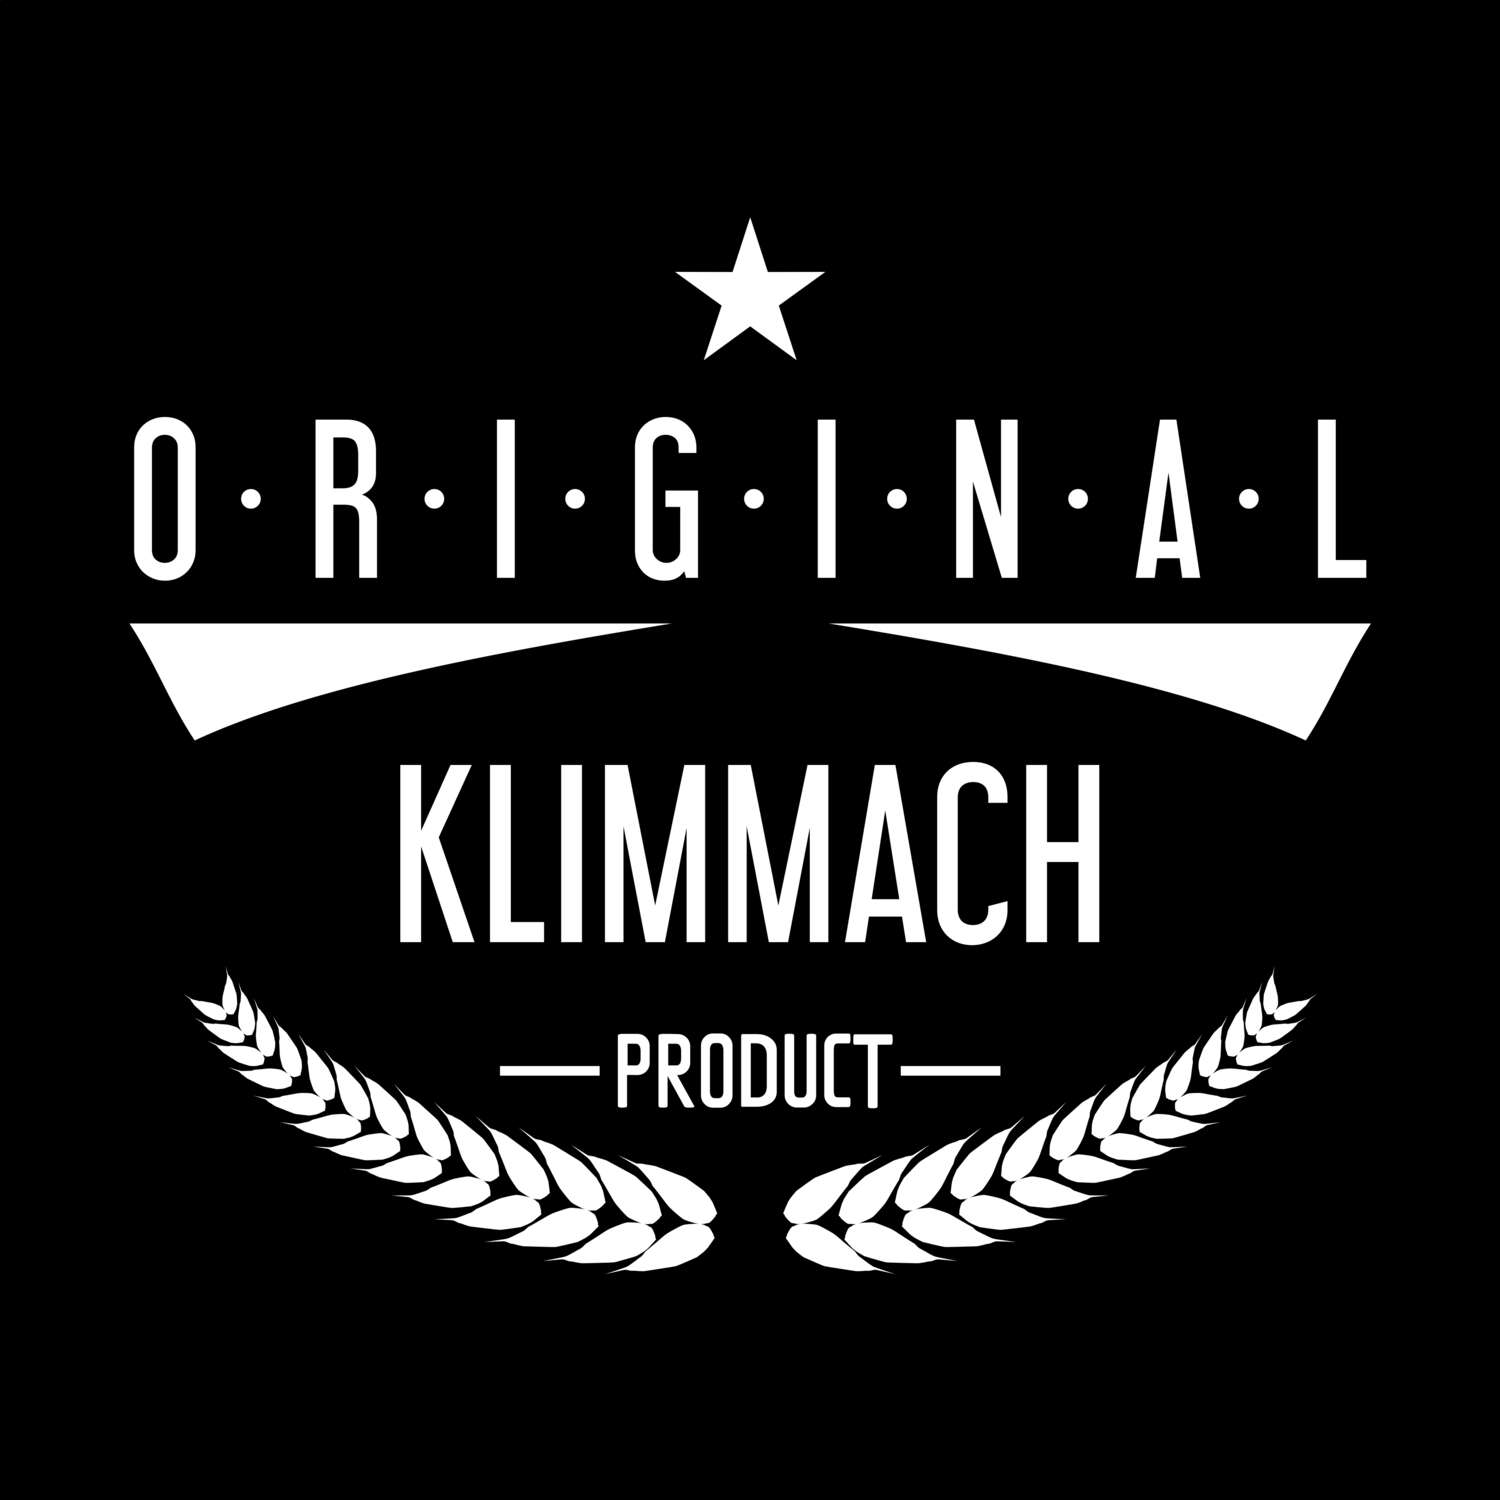 Klimmach T-Shirt »Original Product«